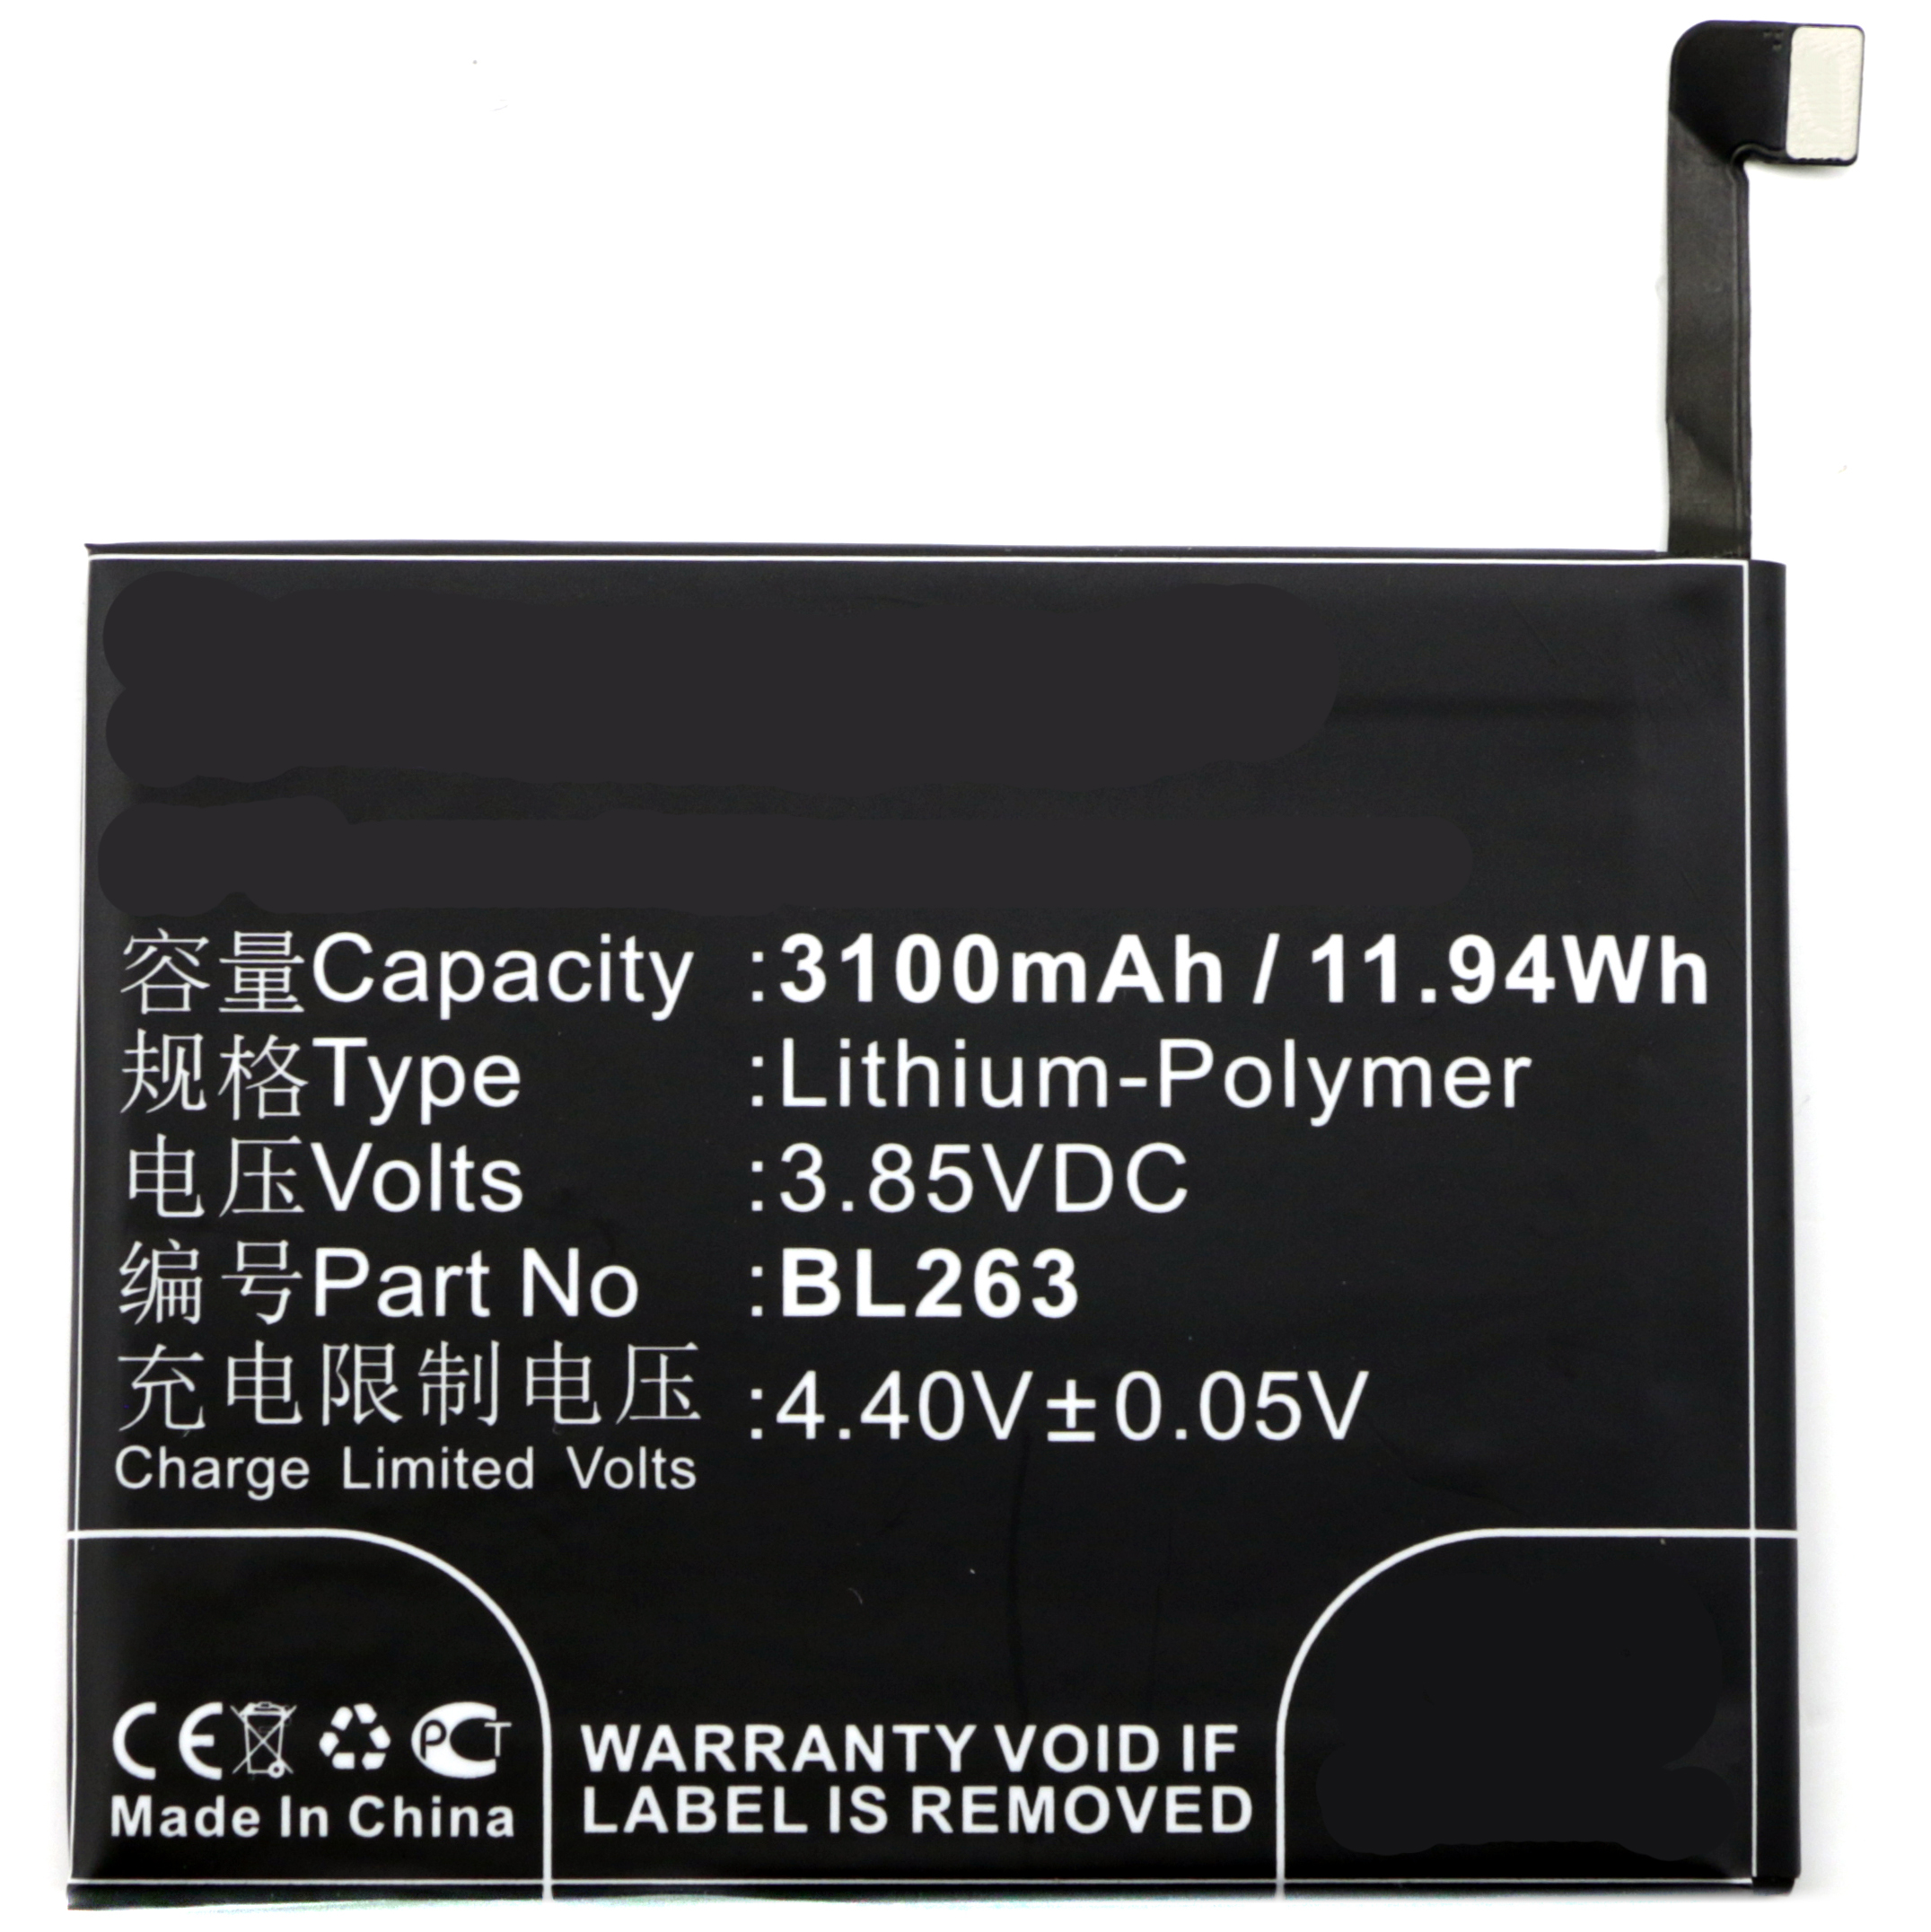 Synergy Digital Cell Phone Battery, Compatiable with Lenovo BL263 Cell Phone Battery (3.85V, Li-Pol, 3100mAh)